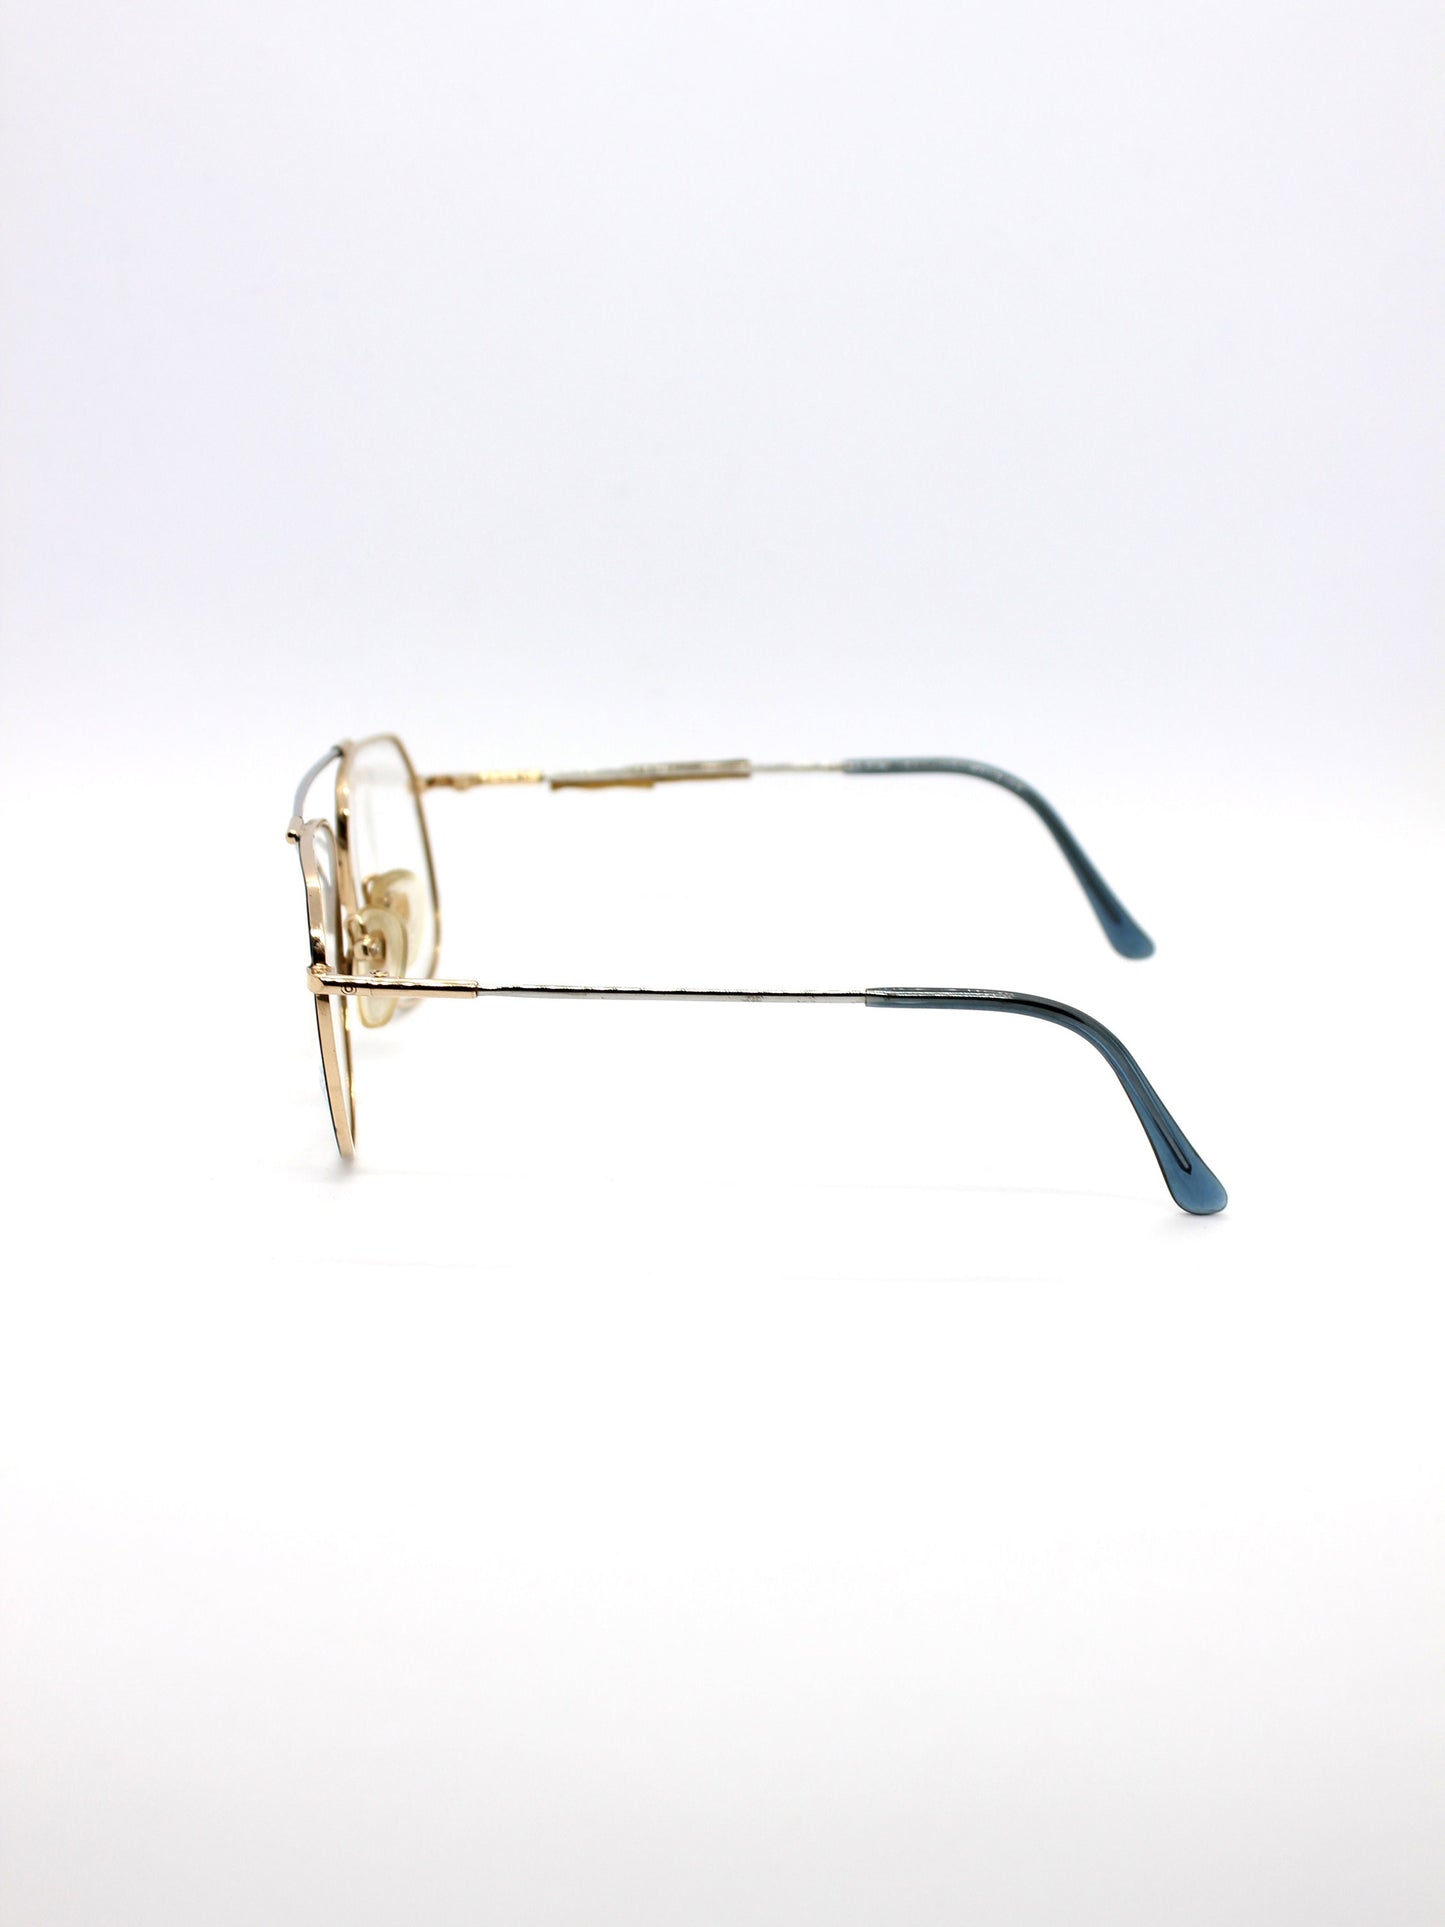 INDO Vintage New old stock Aviator eyeglasses frames. Mod. Memory Jr. Spain